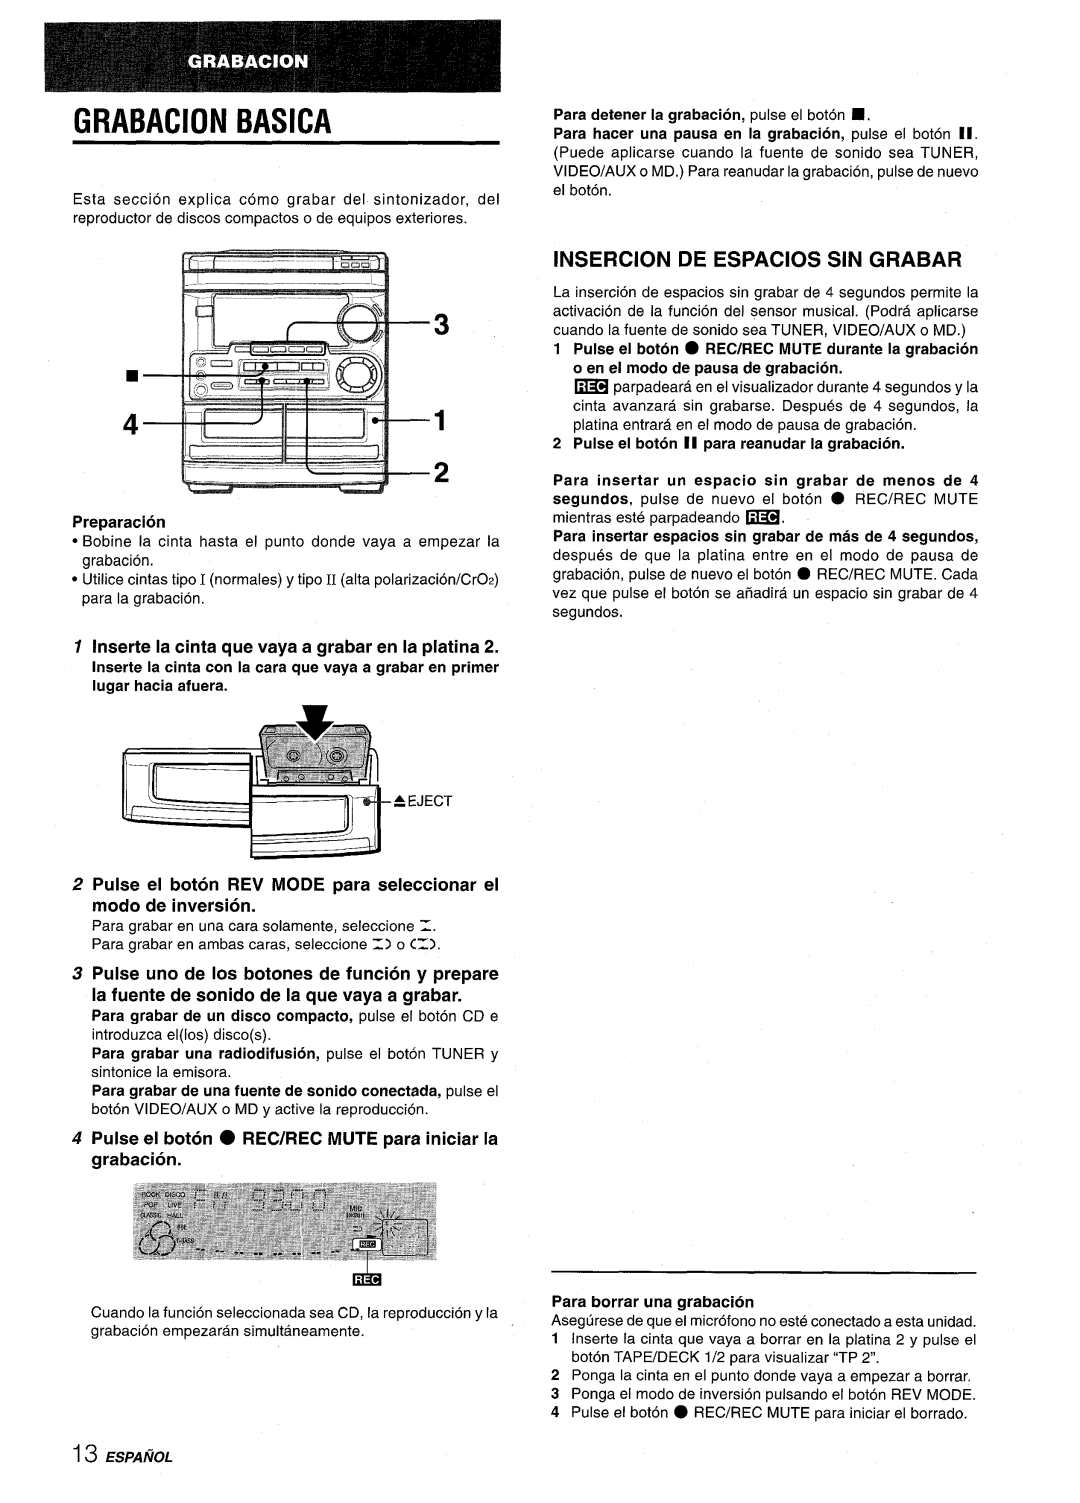 Aiwa CX-NMT50 manual Grabacion Basica, Insercion De Espacios Sin Grabar, Inserte la cinta que vaya a grabar en la platina 